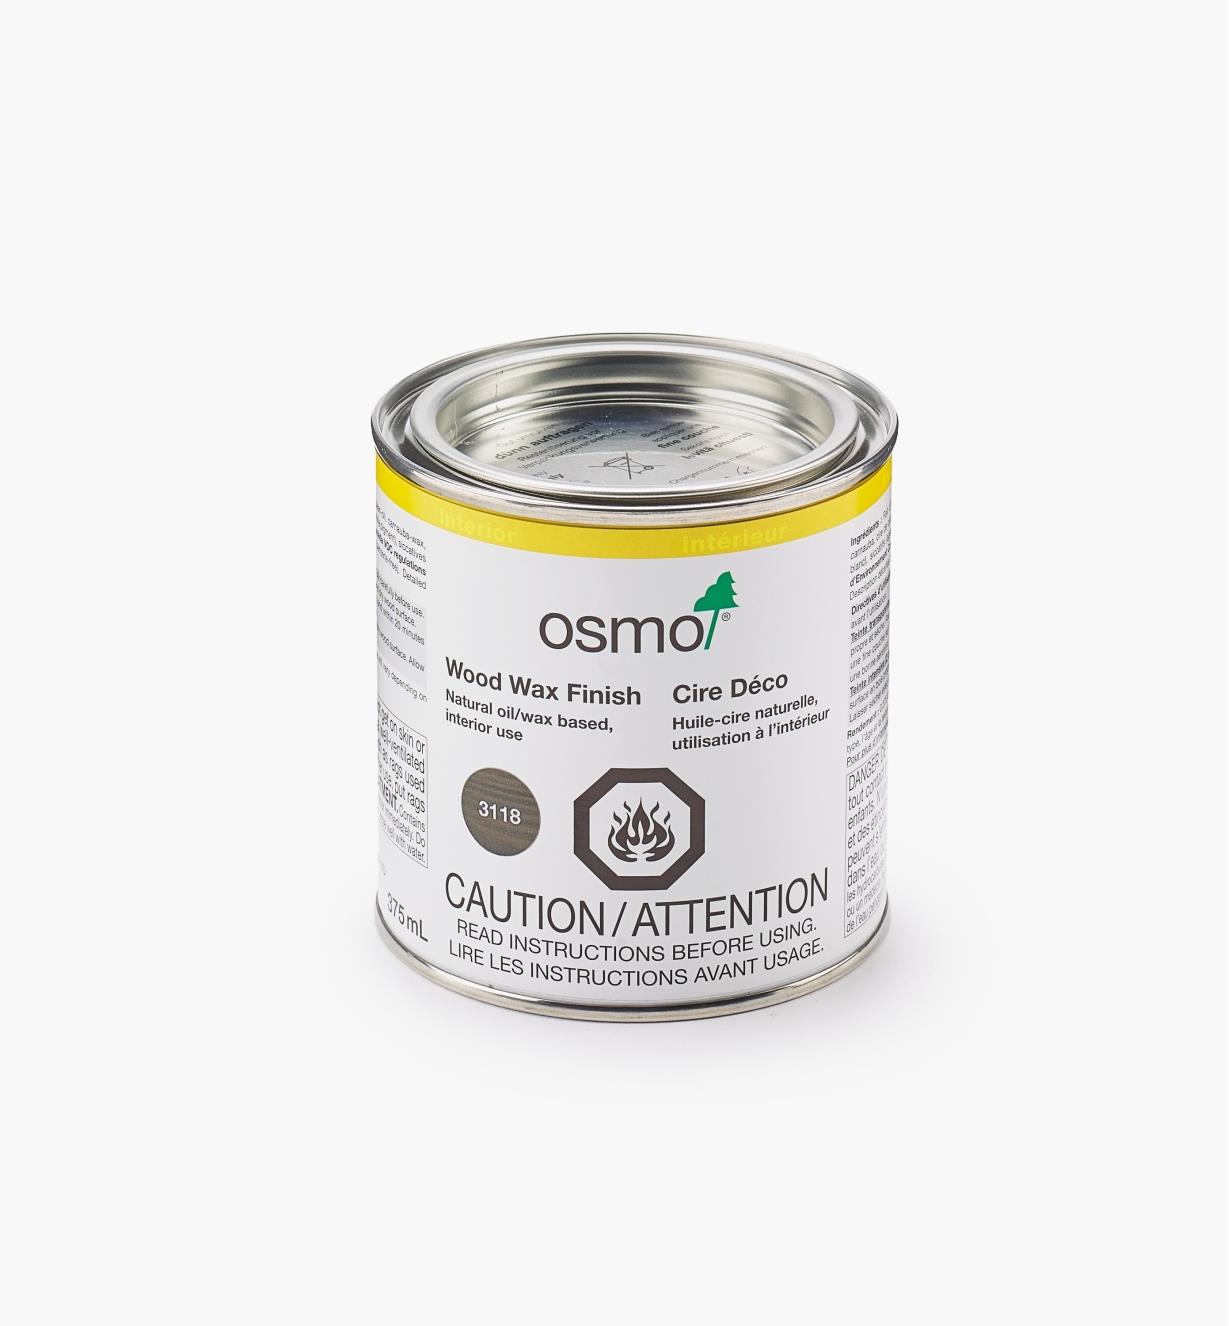 27K2760 - Osmo 3118 Granite Gray Wood Wax Finish, 375ml (12.5 fl oz)